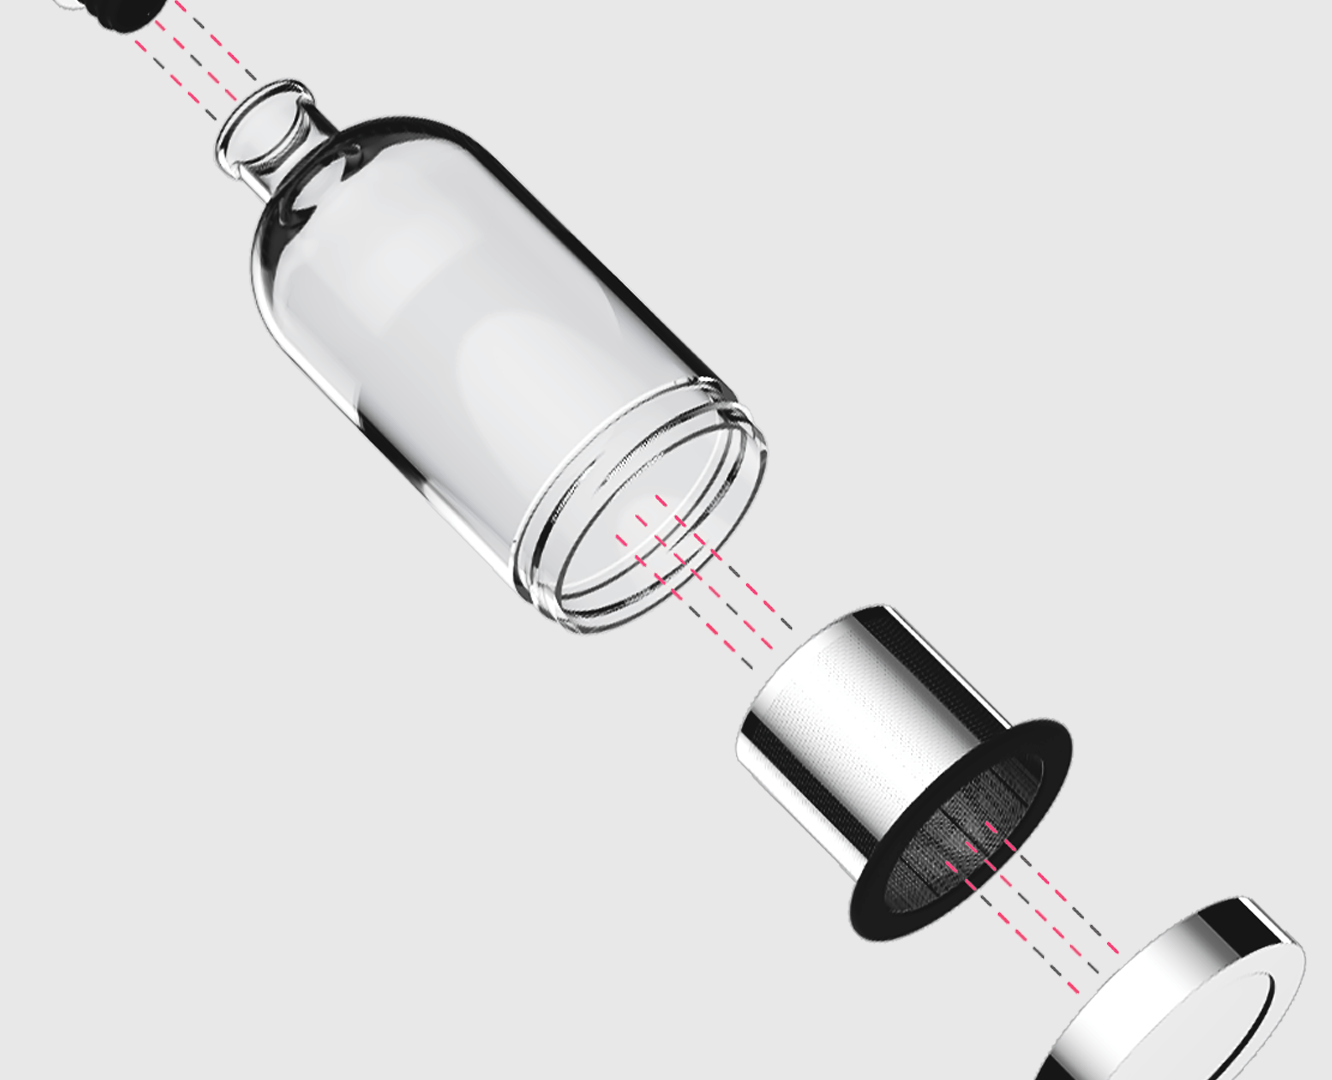 alkemista-alcohol-infusion-vessel-de-assembled-45-light-background